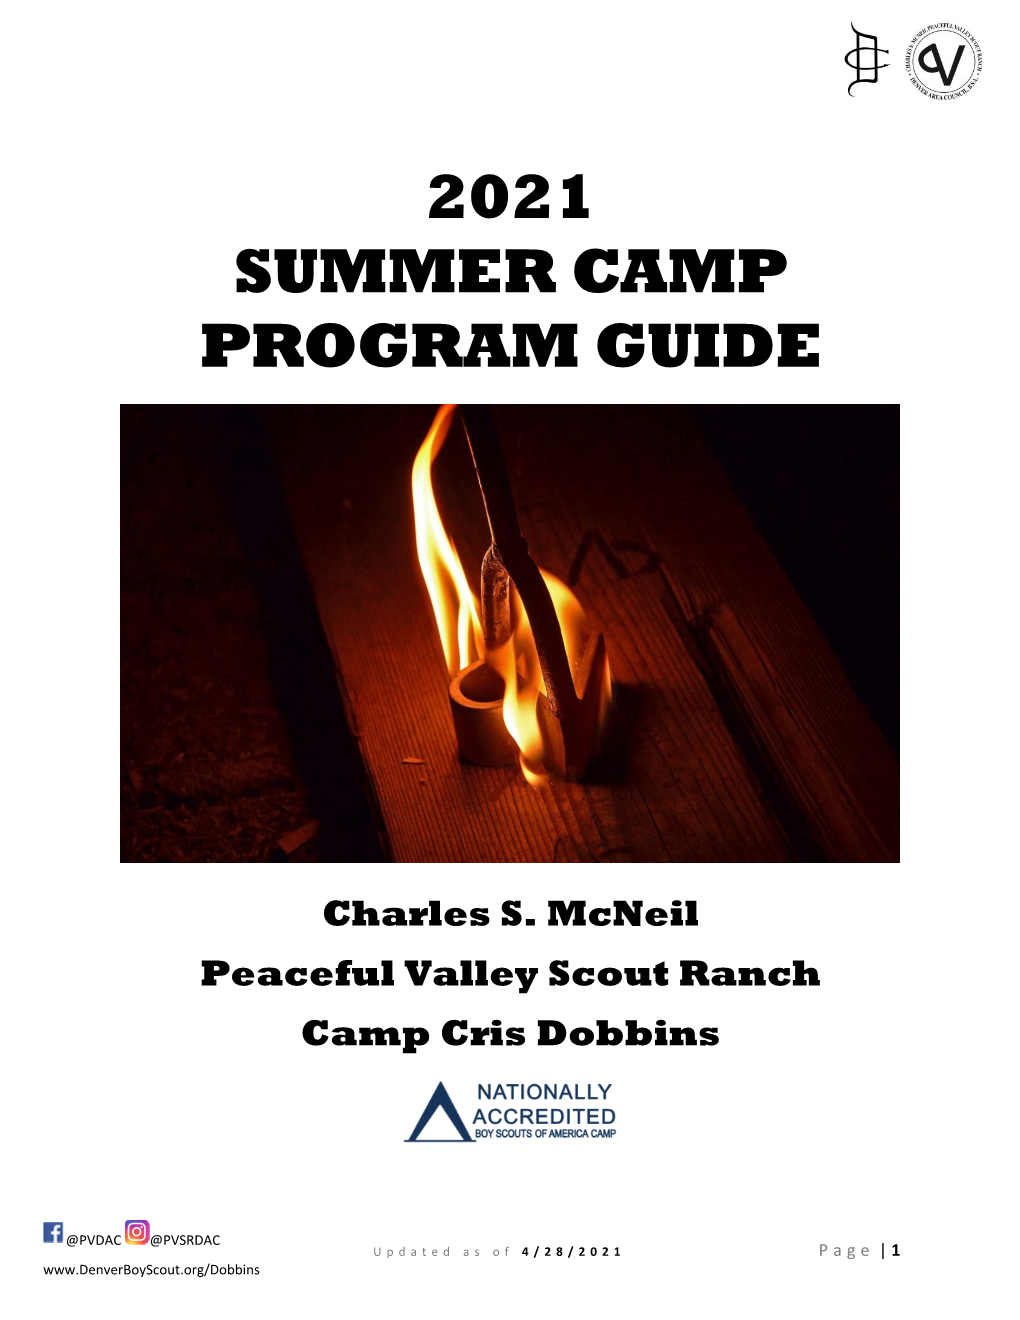 2021 Summer Camp Program Guide